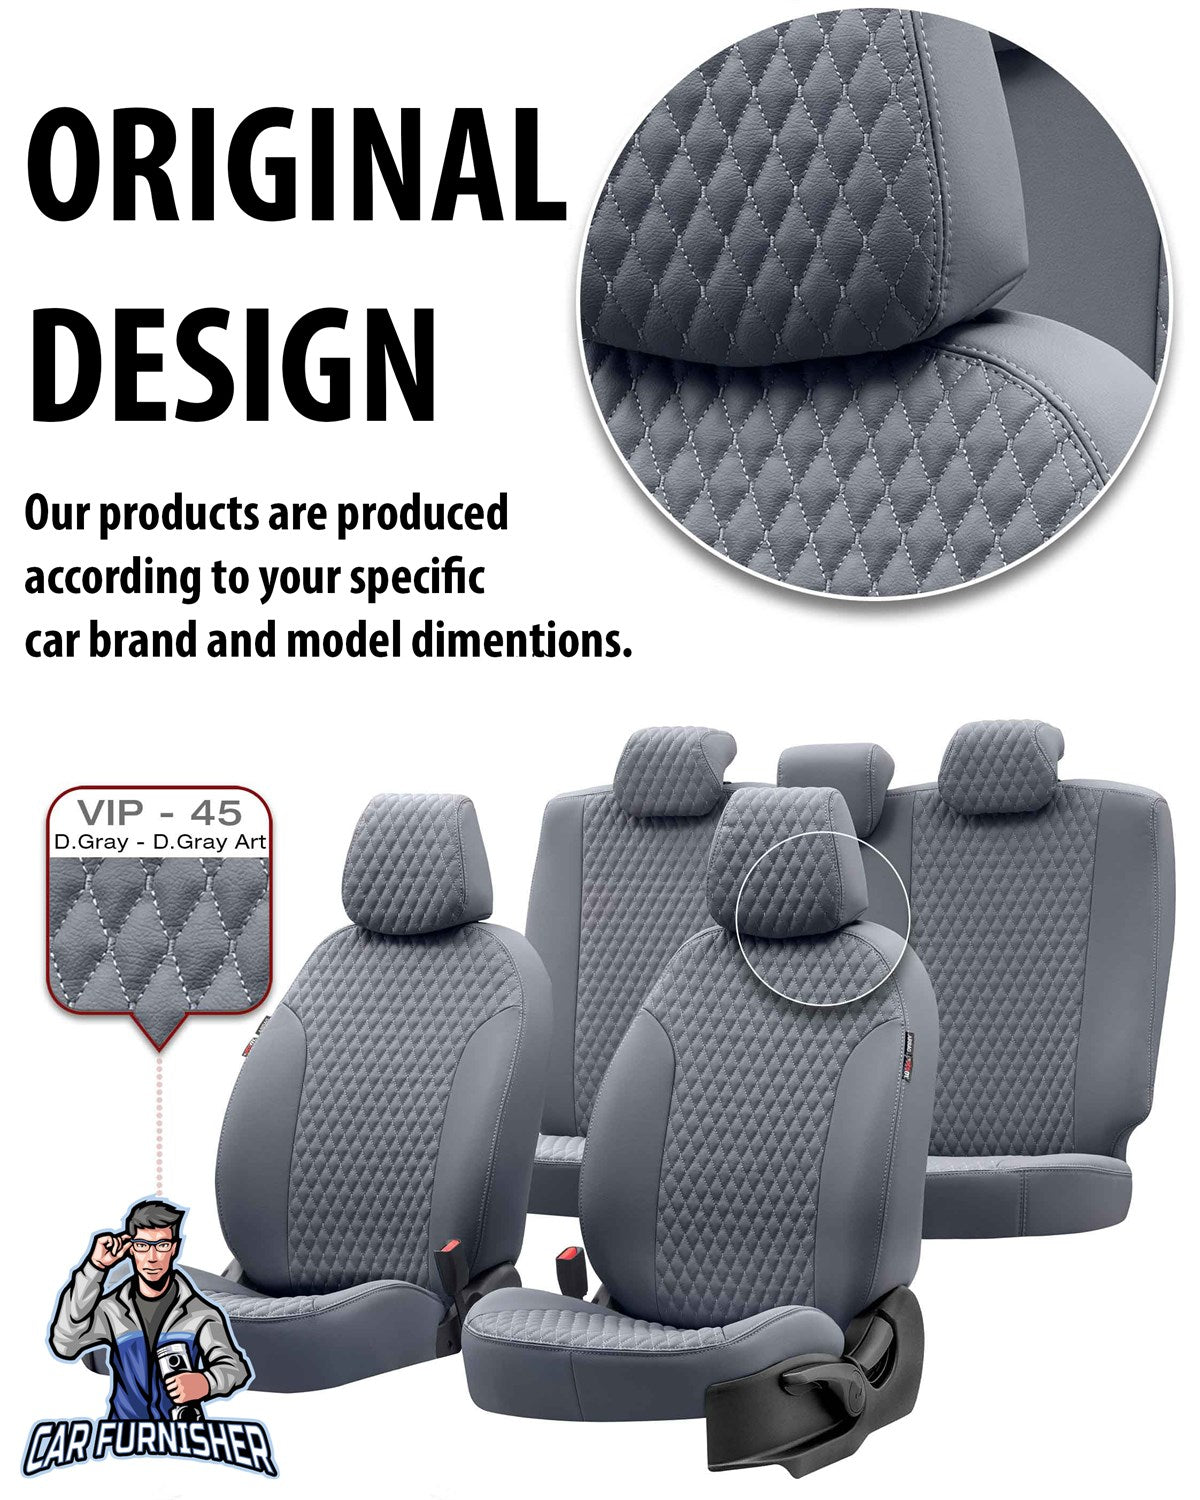 Chevrolet Captiva Seat Cover Amsterdam Leather Design Black Leather